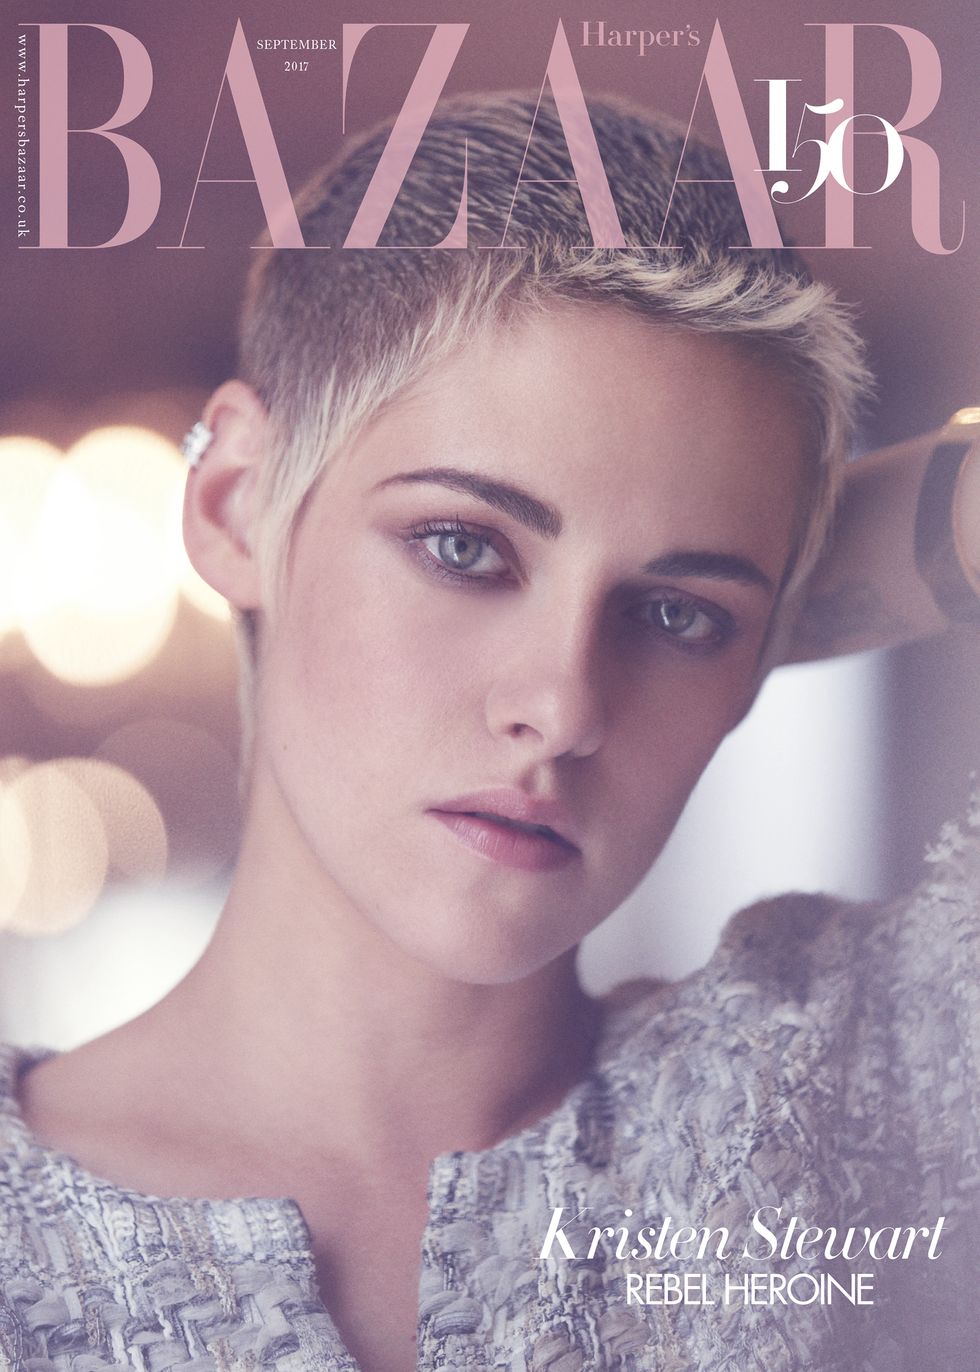 Kristen Stewart in the September 2017 issue of Harper's Bazaar